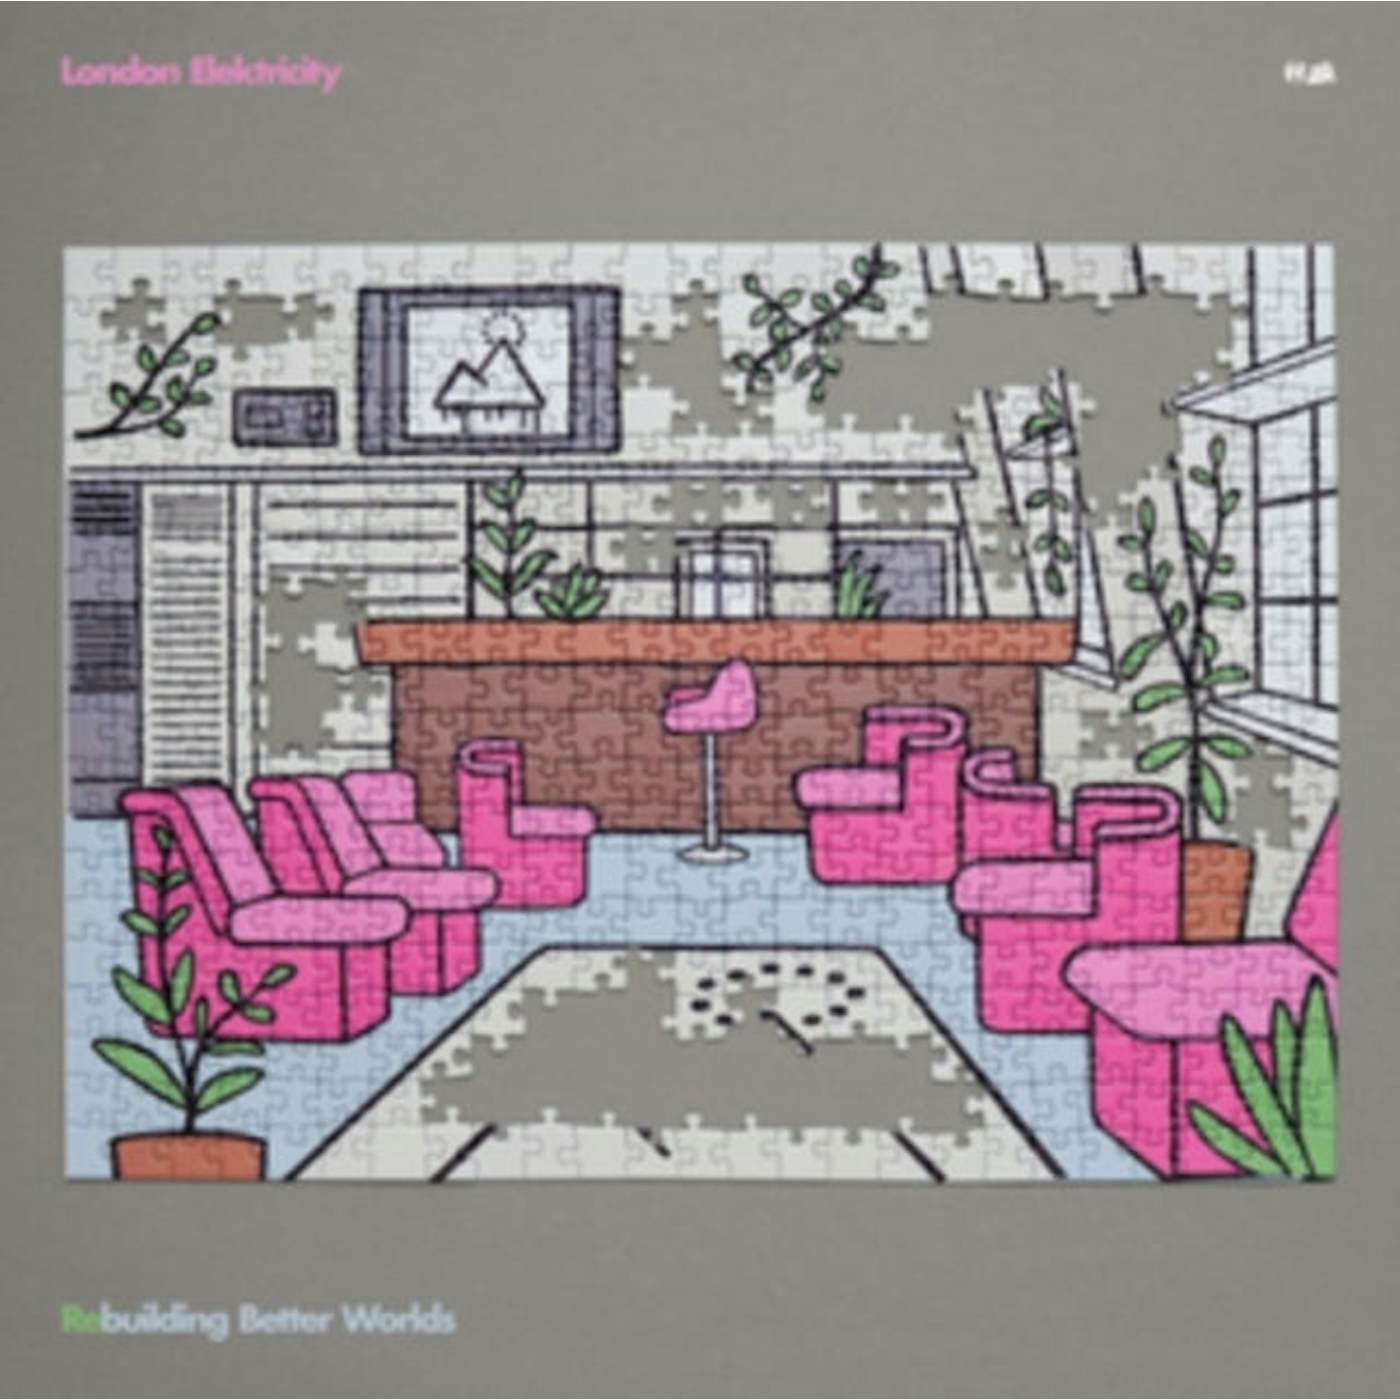 London Elektricity LP Vinyl Record - Rebuilding Better Worlds